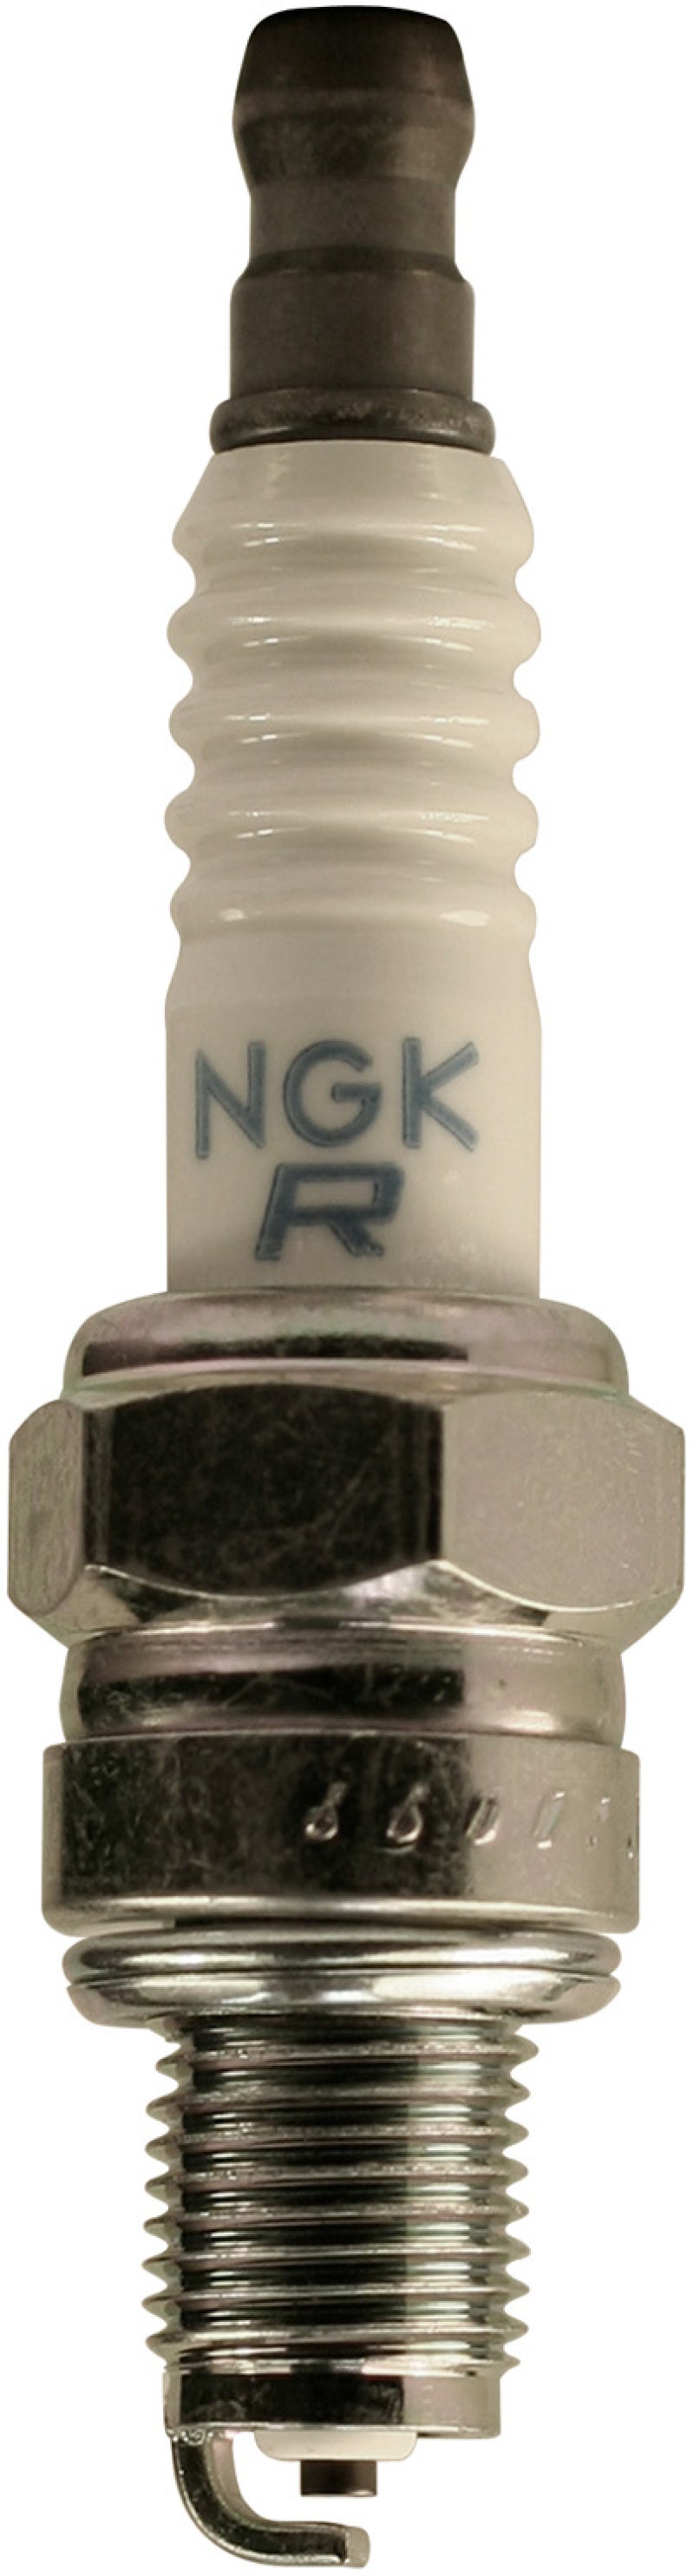 NGK NGK Copper Ignition Spark Plugs main image